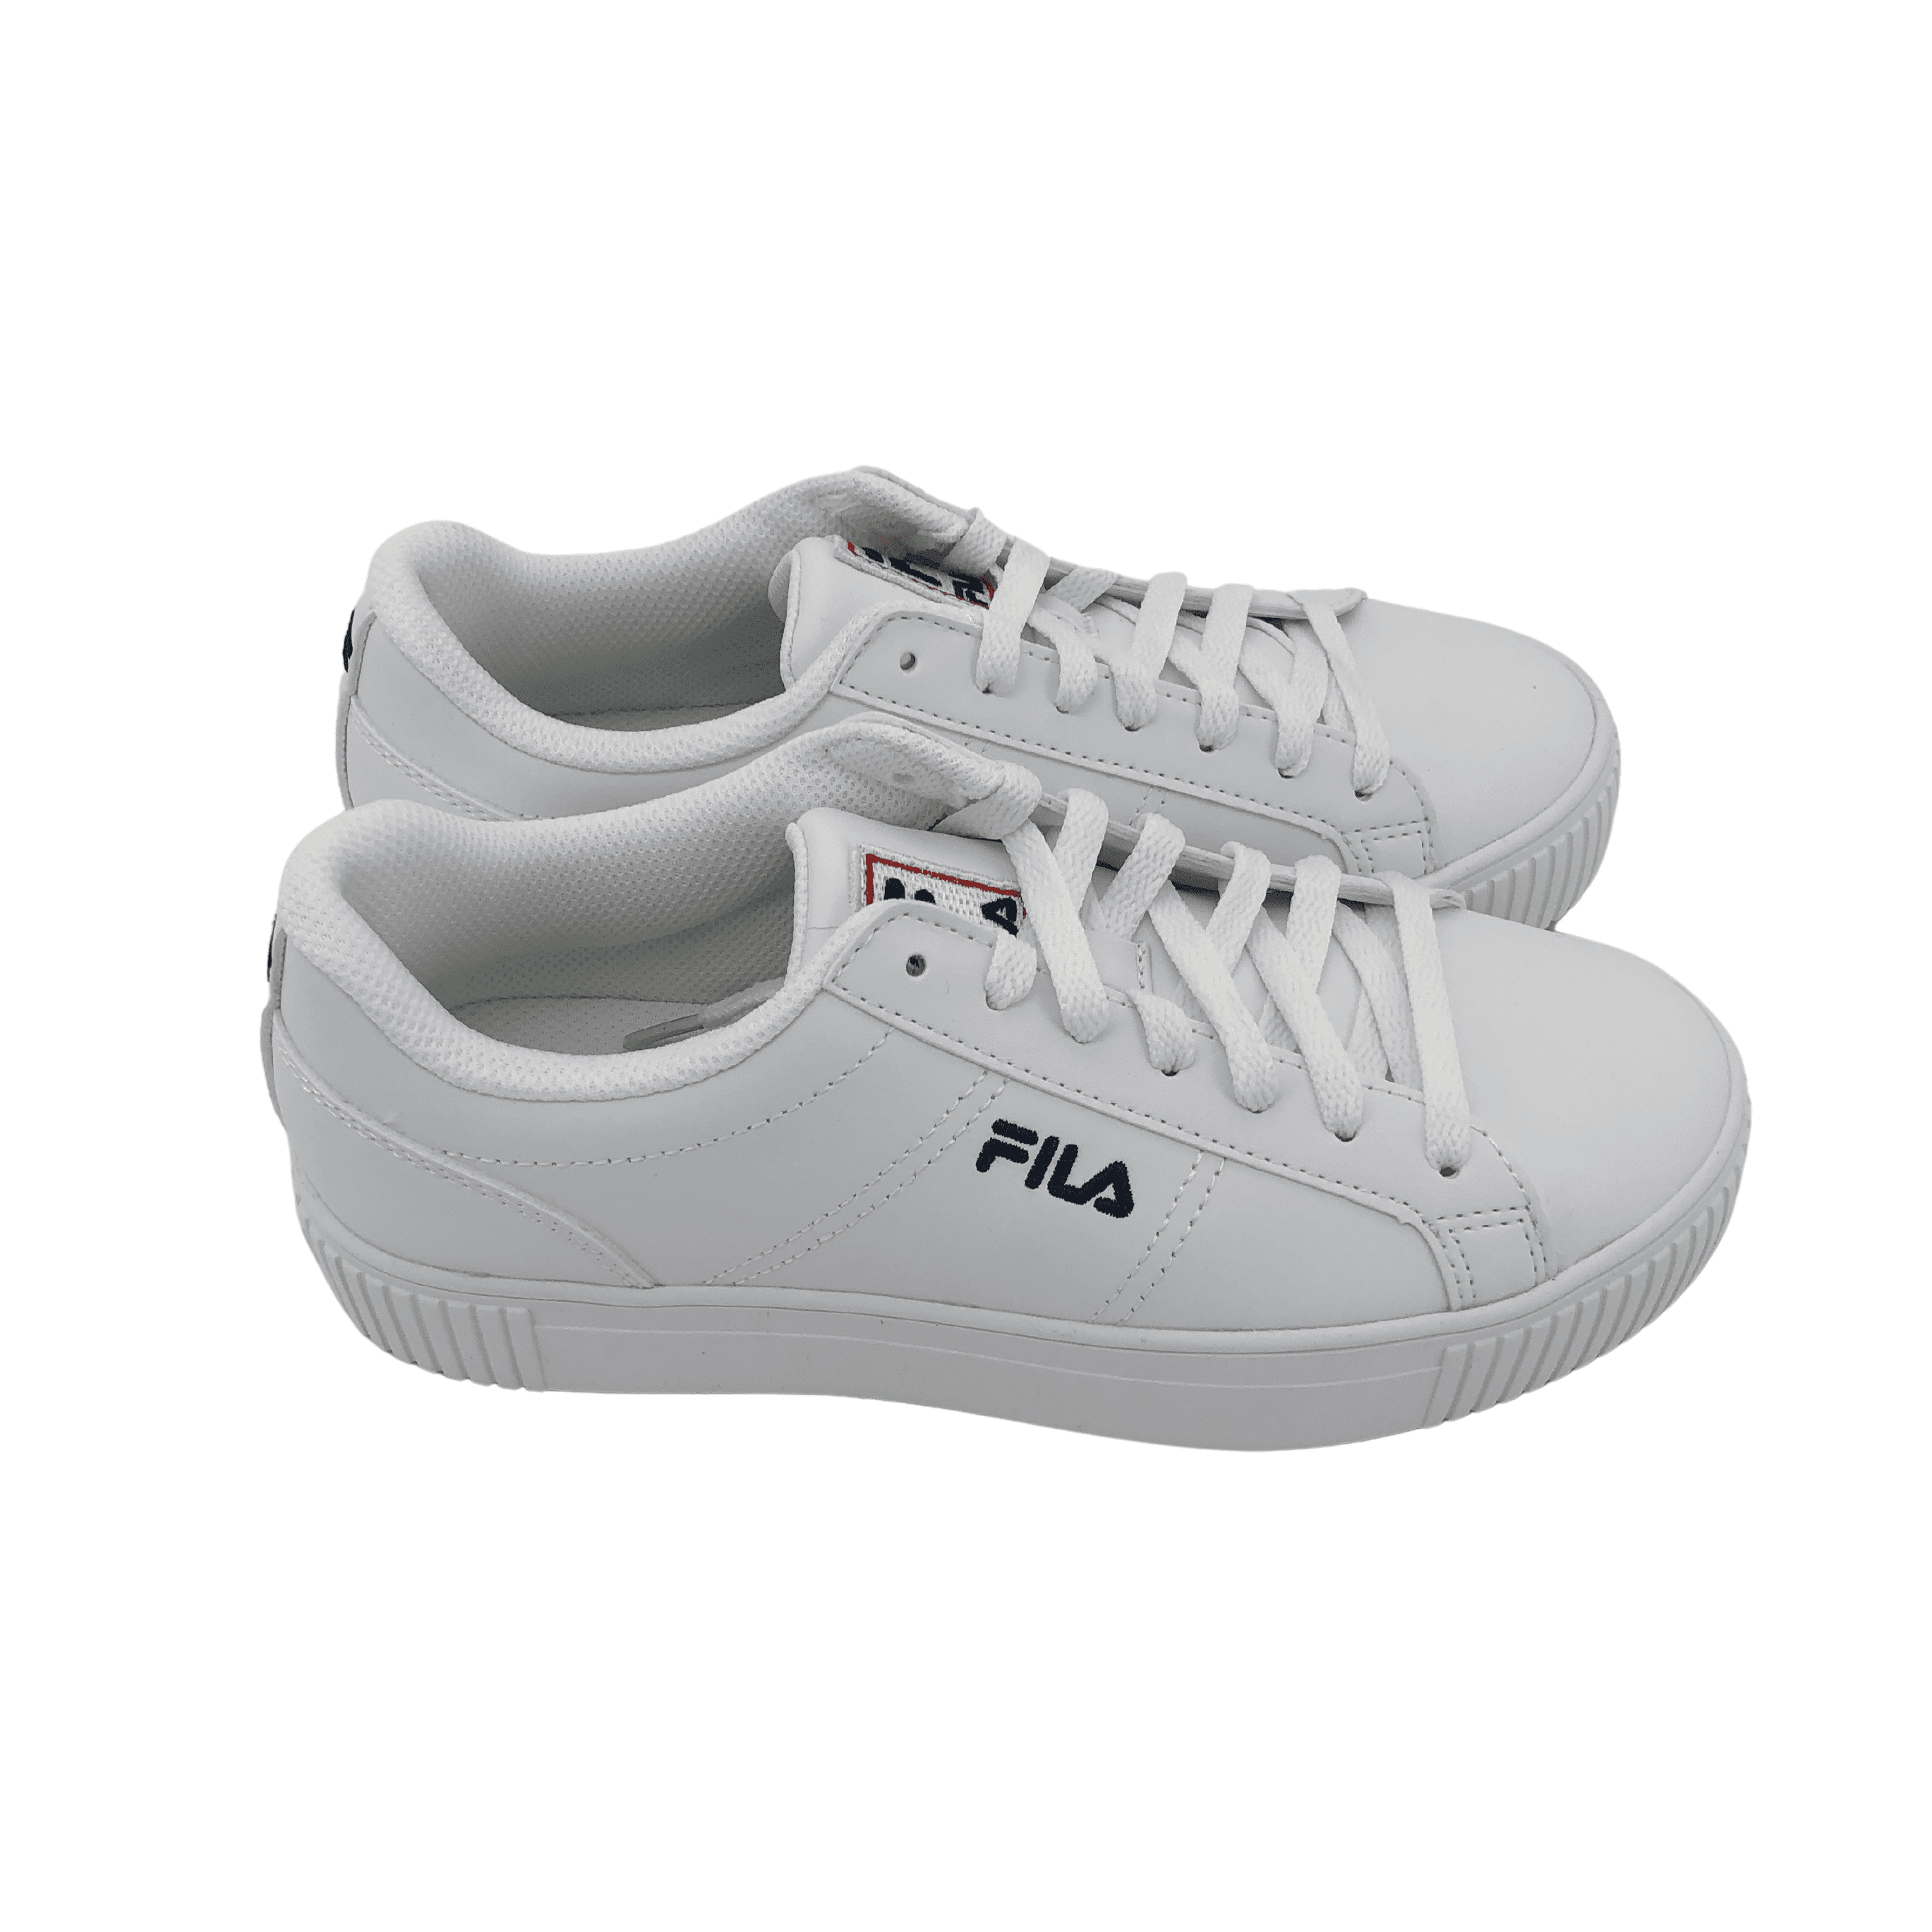 Fila Women's Running Shoe / Redmond / Fashion Sneaker / Size 7.5 / White